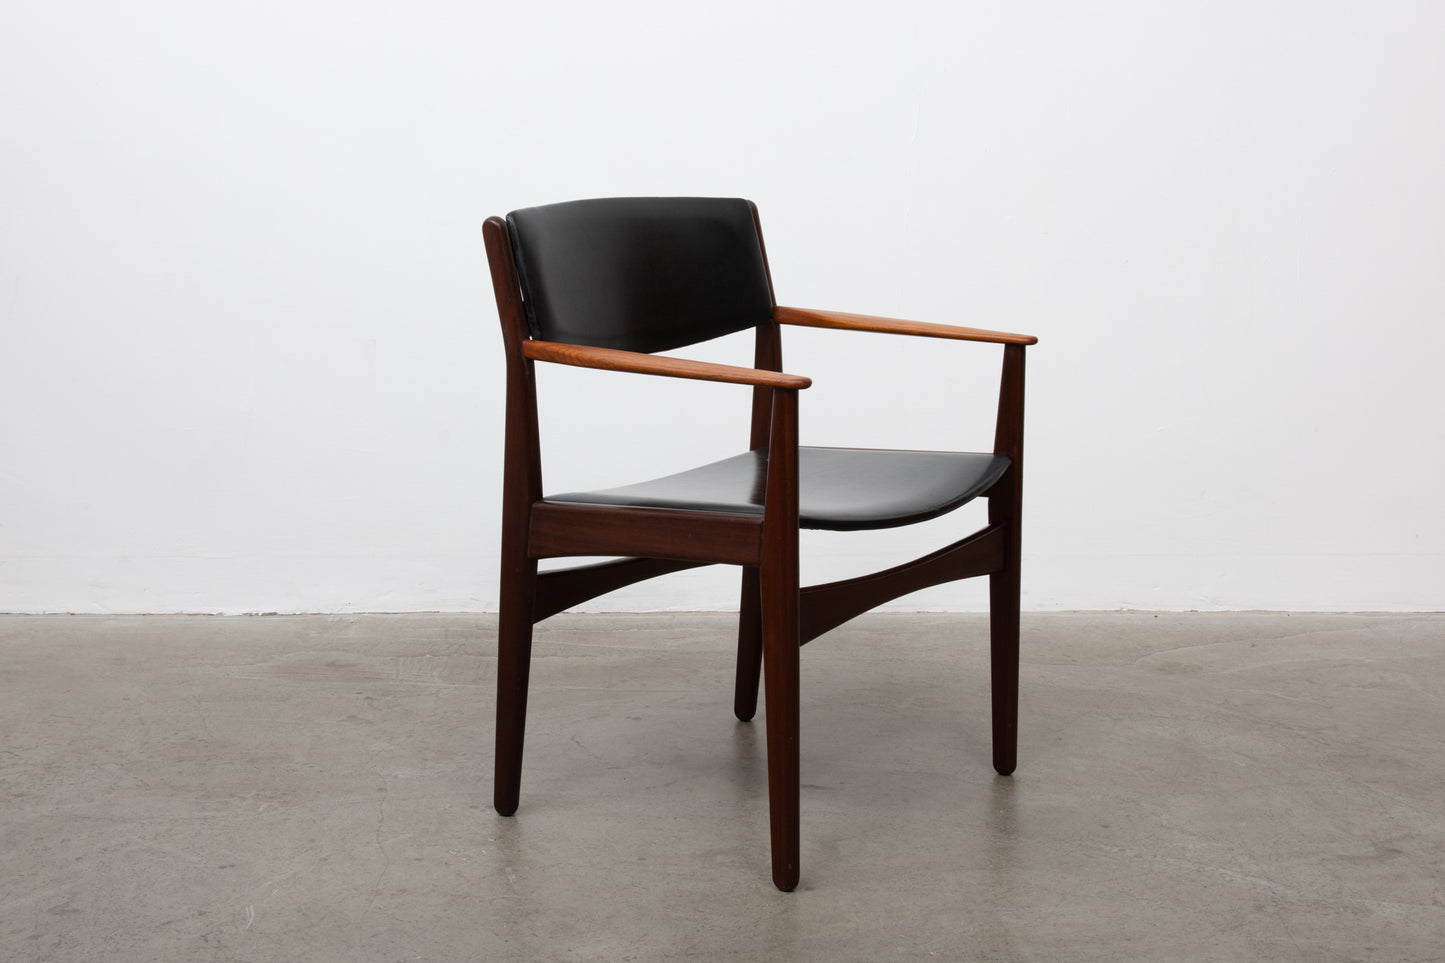 1960s teak armchair by Hans Olsen